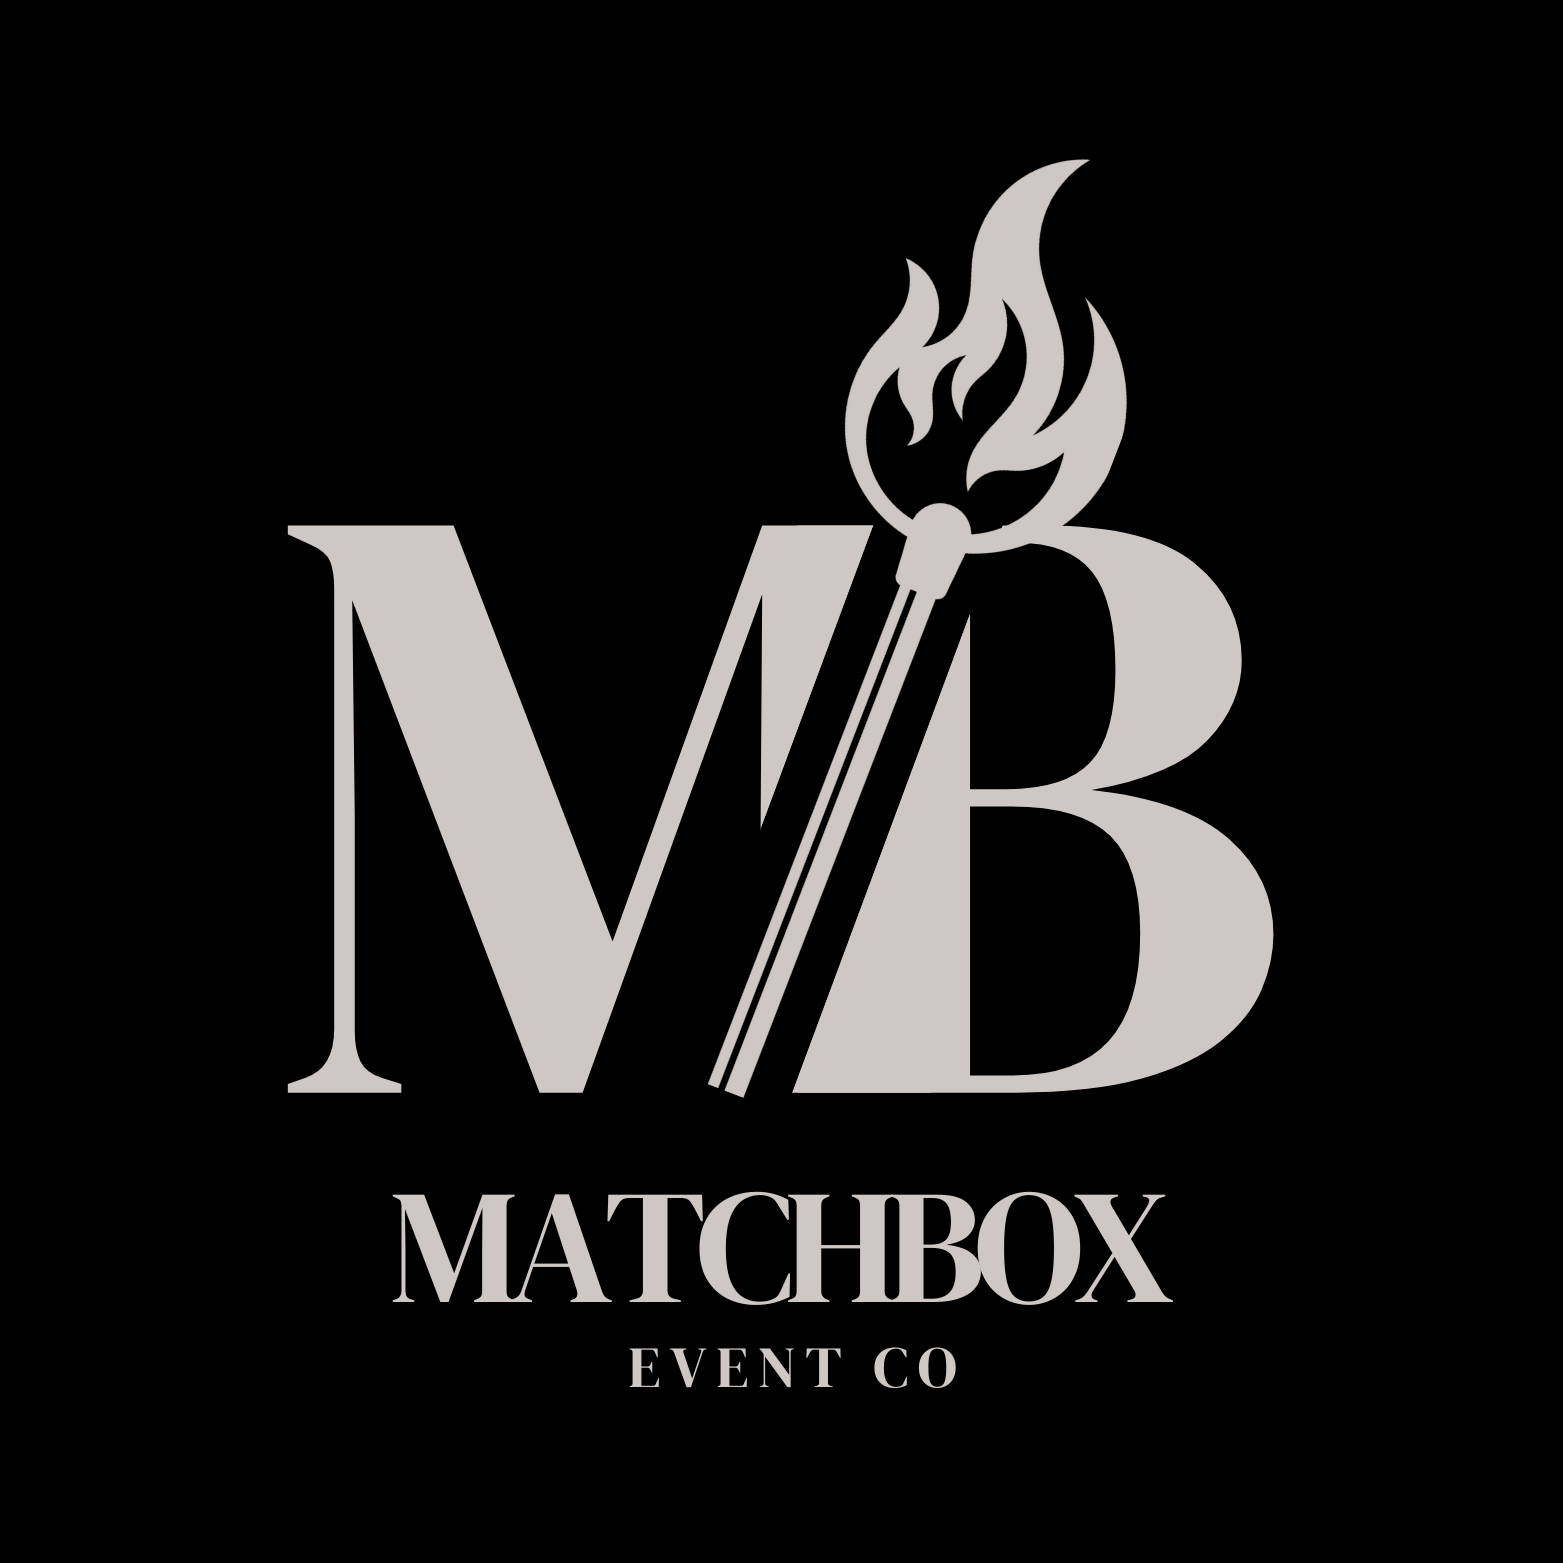 matchbox logo png